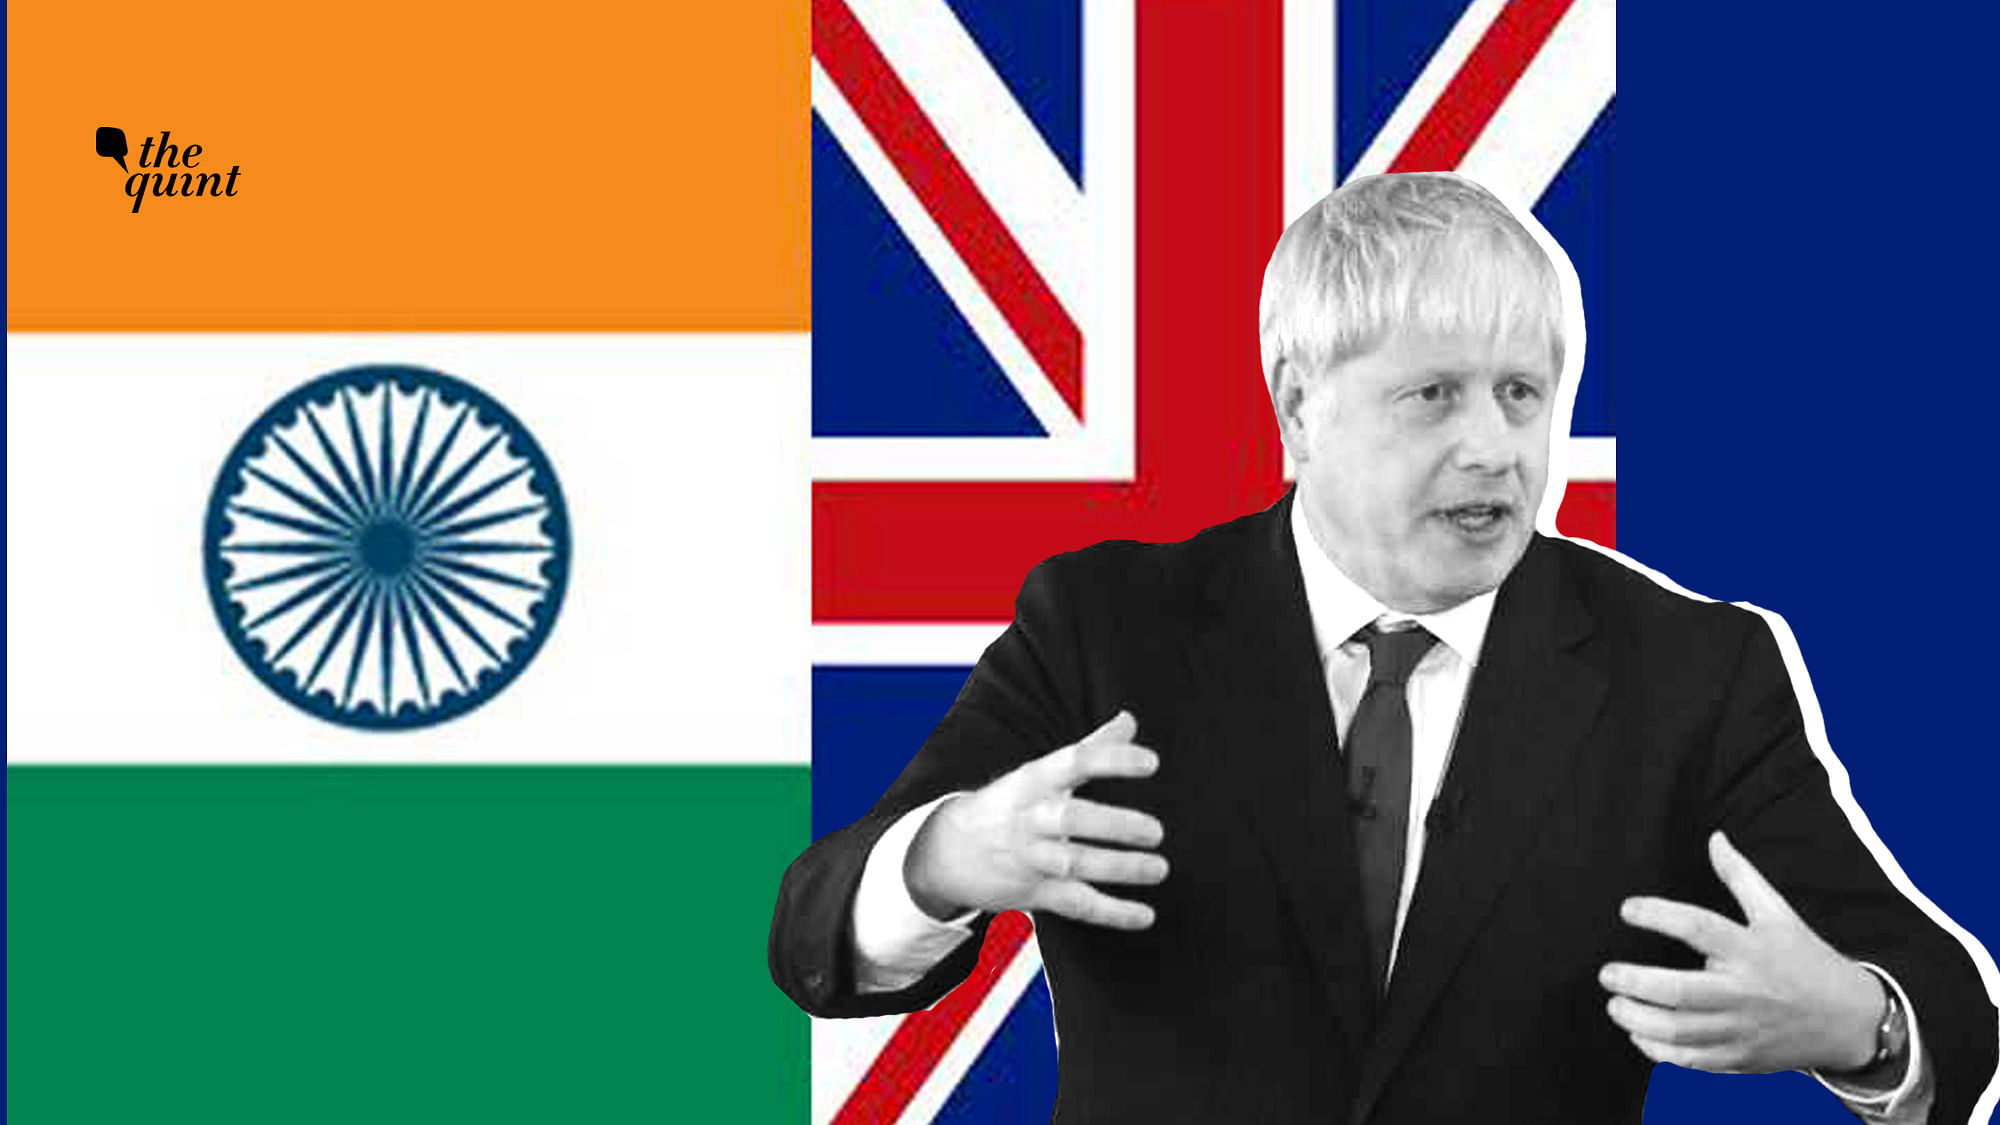 Image of new UK PM Boris Johnson used for representational purposes.